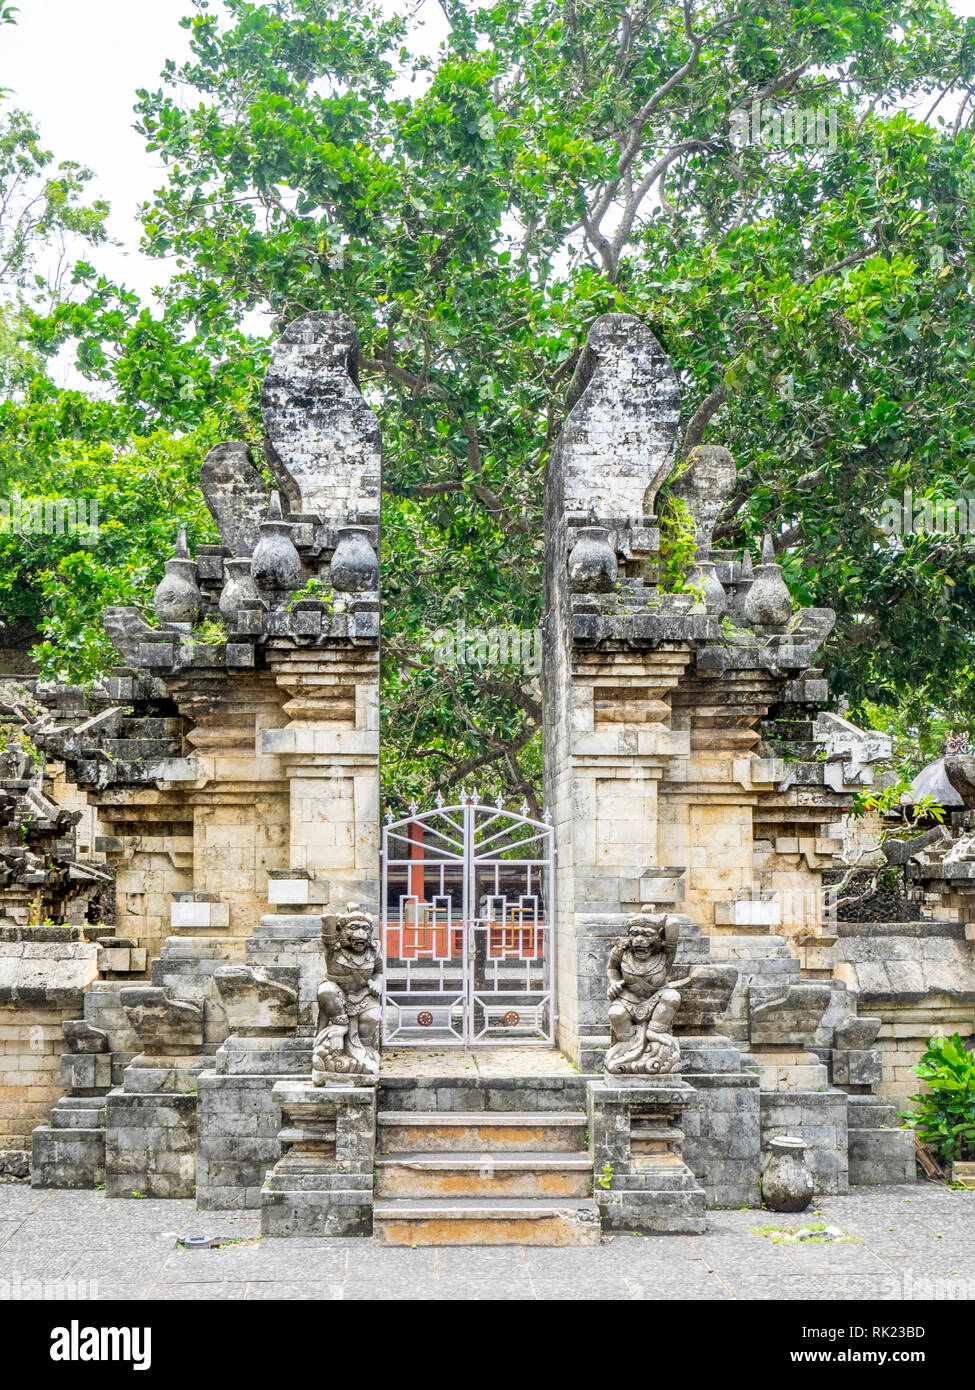 Pura hindu Temple Jimbaran, Bali Indonesia. Stock Photo